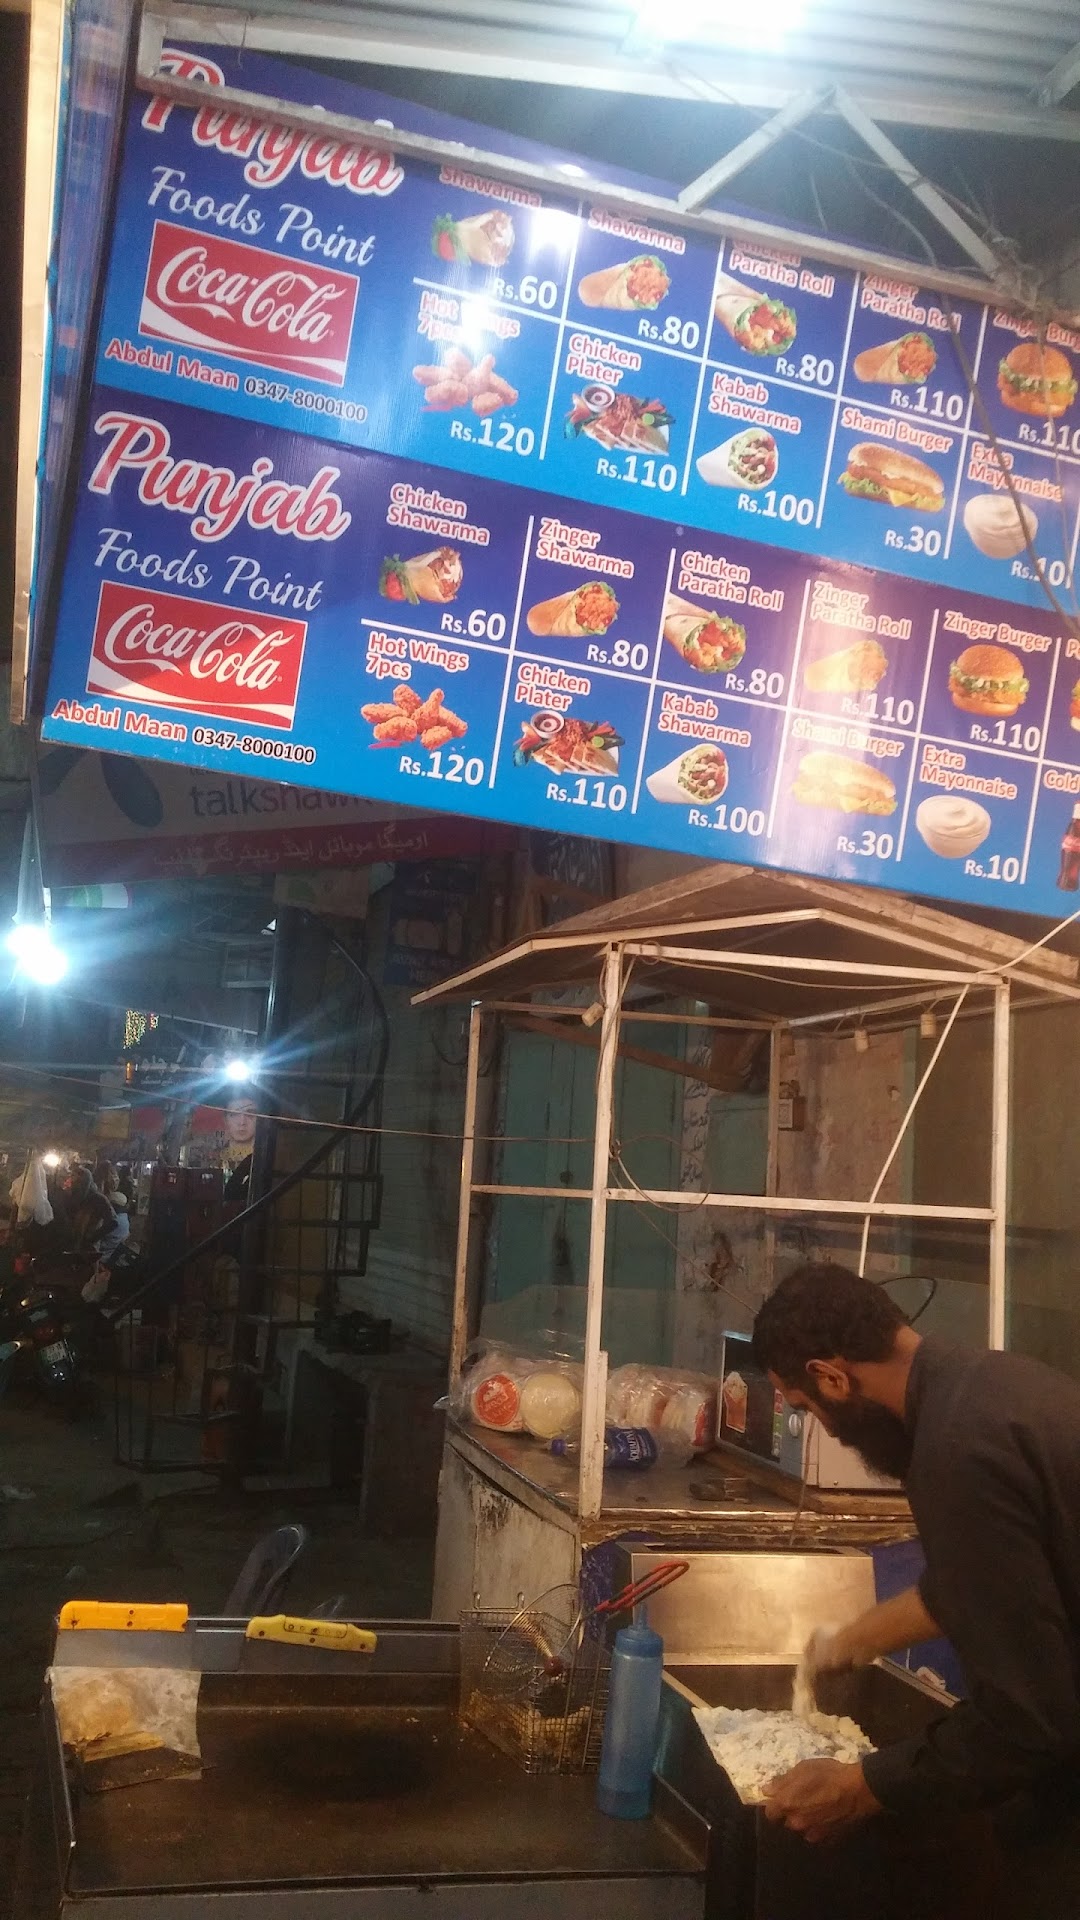 Punjab Fast Food & BarBQ